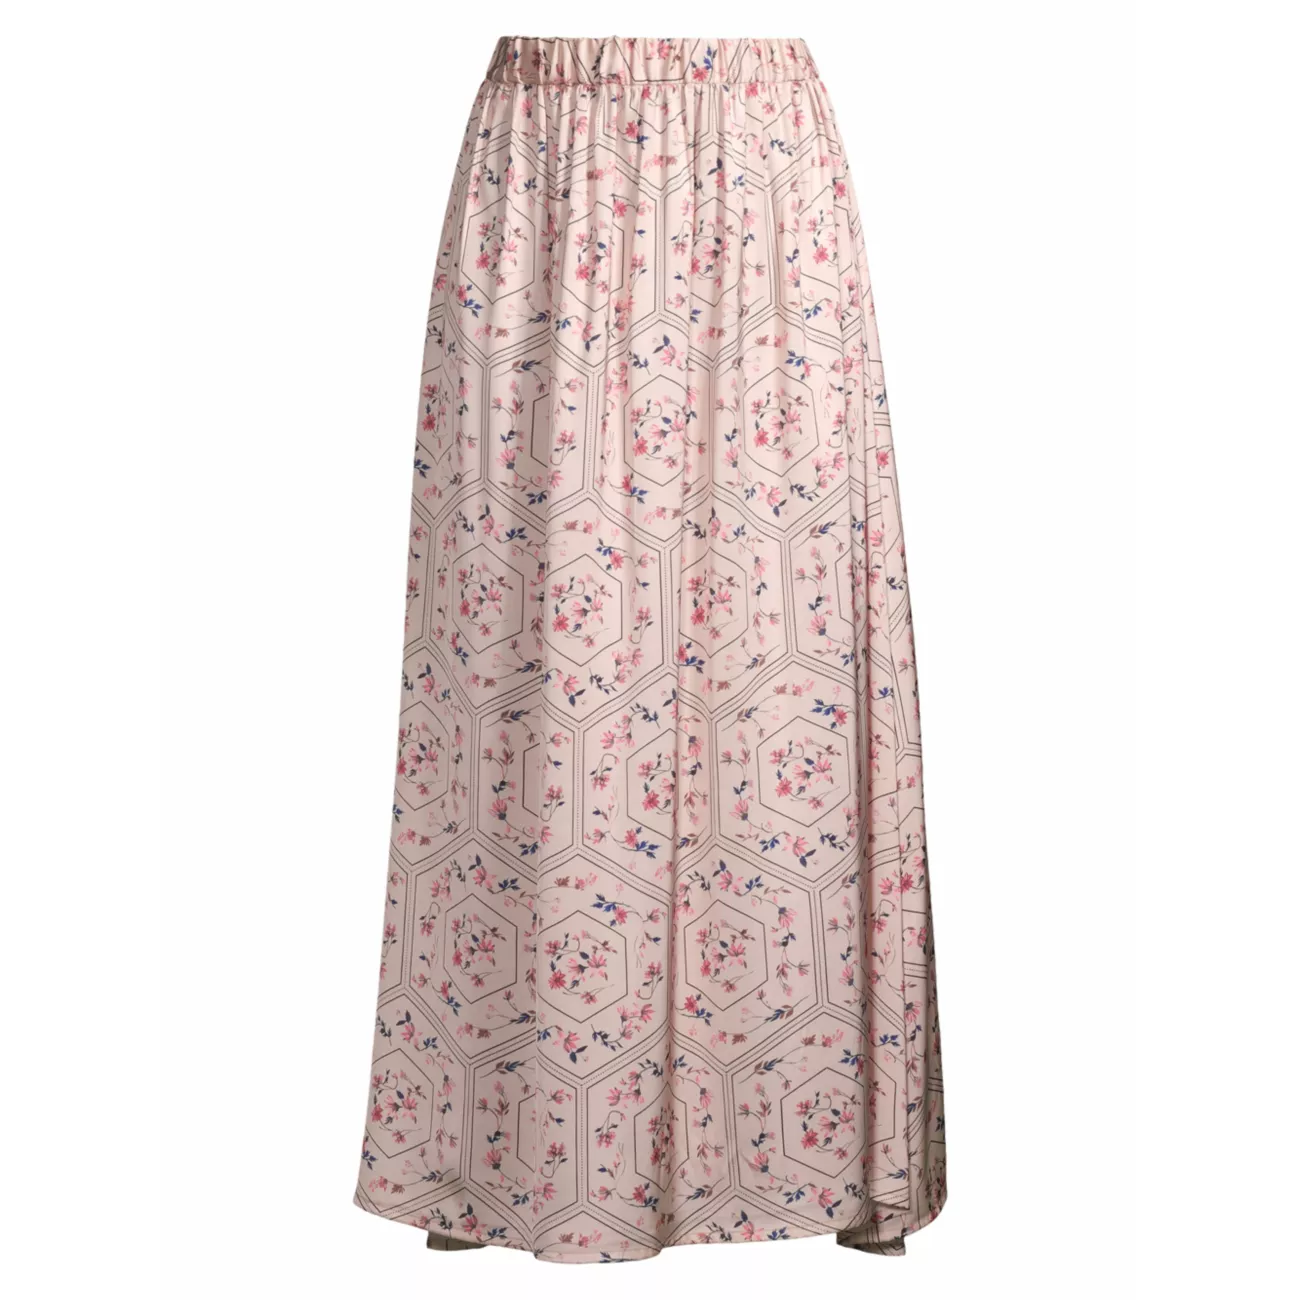 Floral Print Pleated A-Line Maxi Skirt Misook